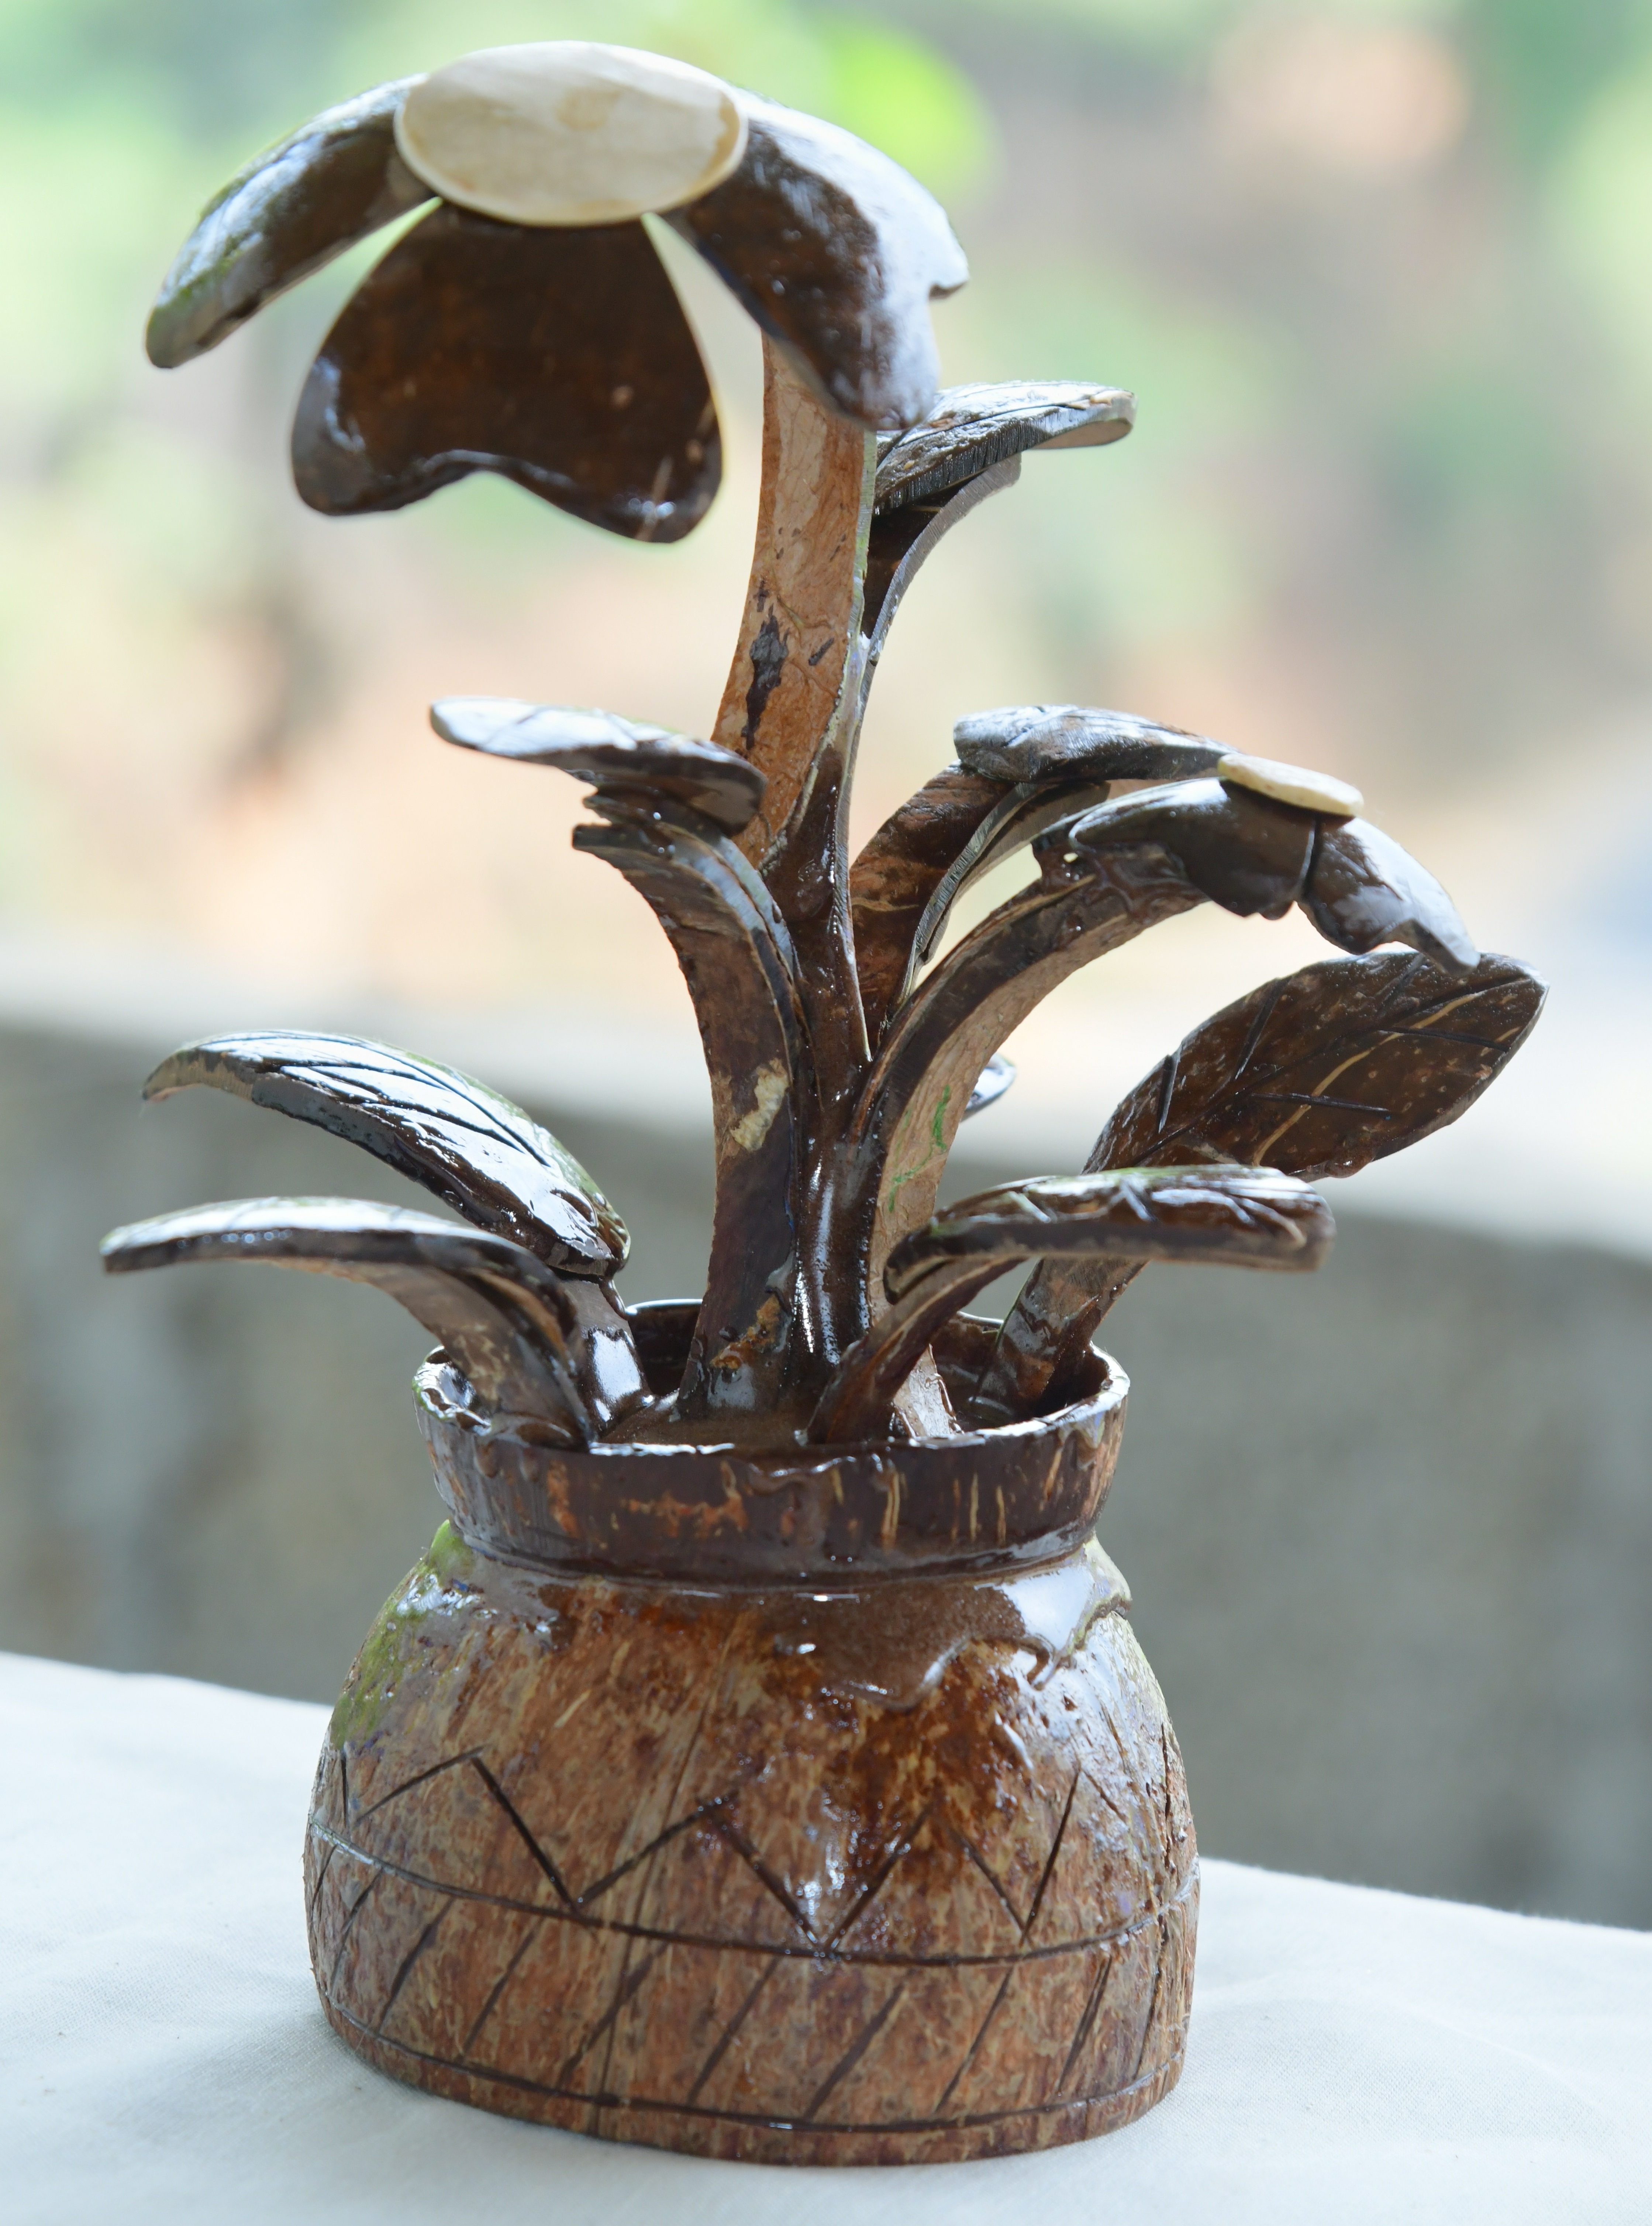 Display of Coconut shell handicrafts 